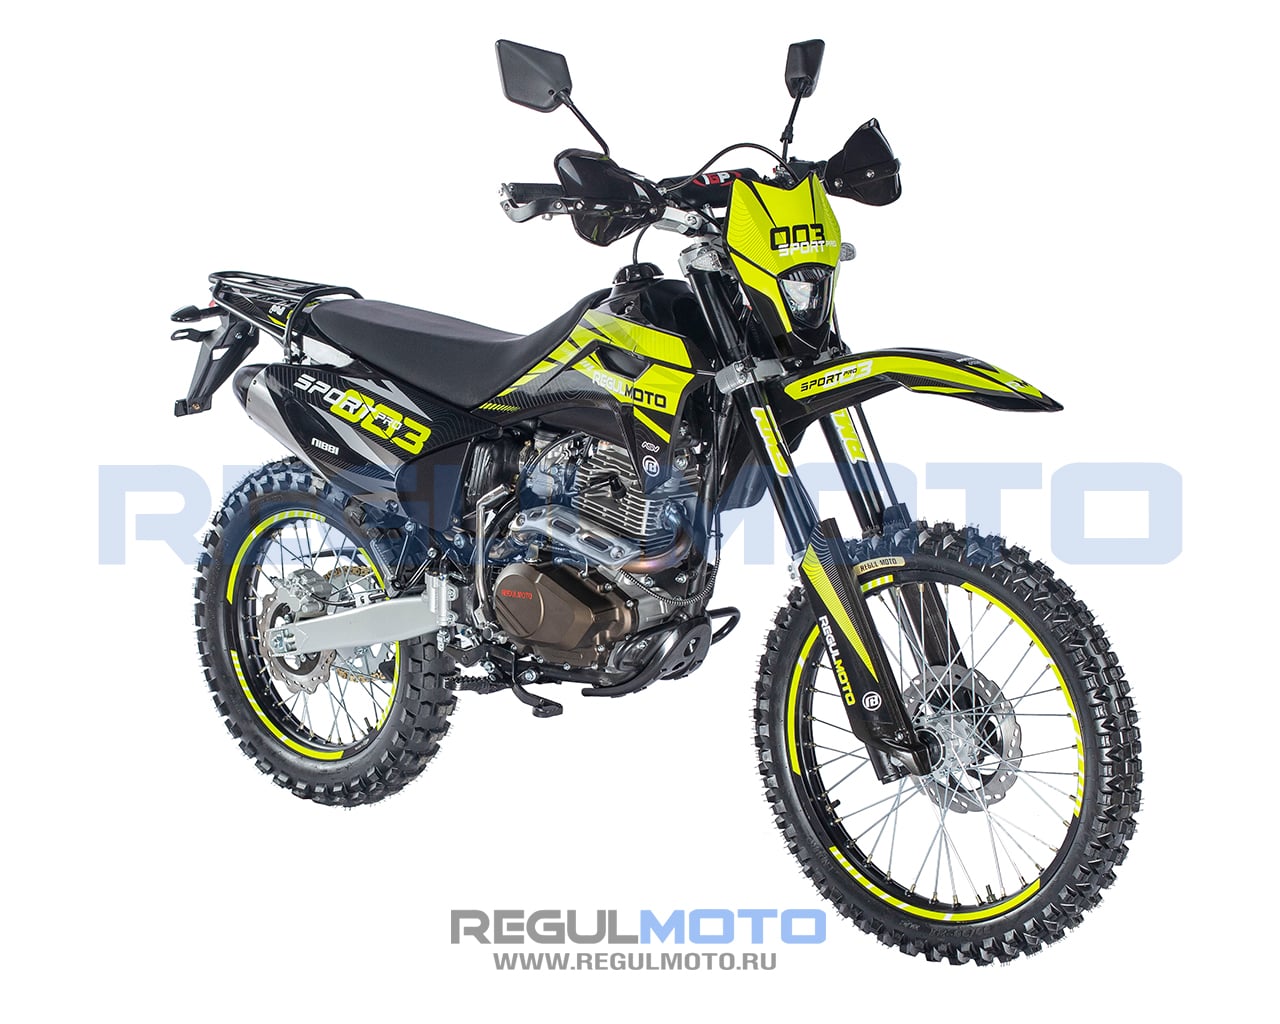 Мотоцикл Regulmoto Sport-003 PR PRO (4 valves) 6 передач